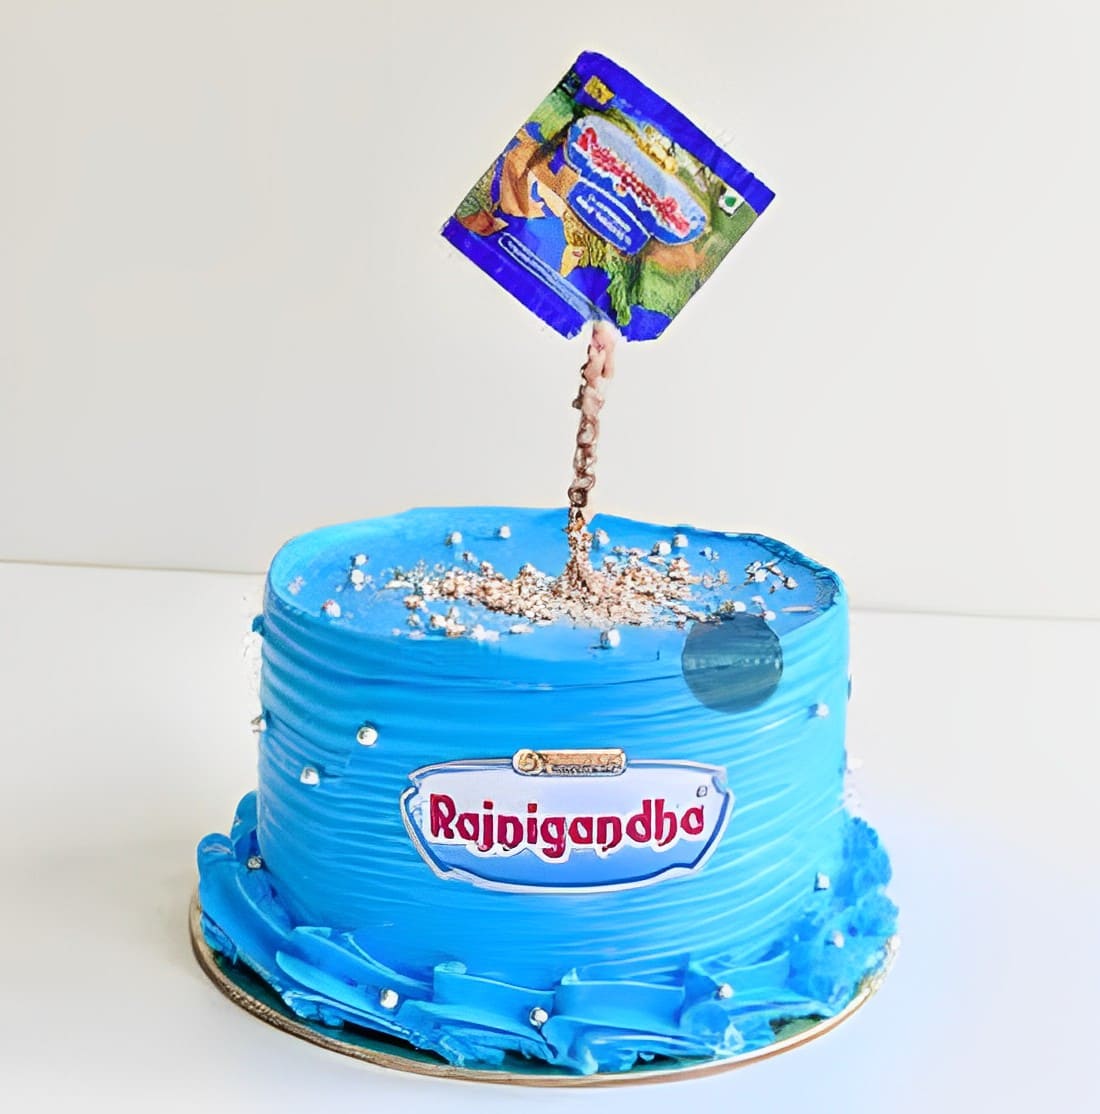 How To Make Rajnigandha Theme Cake || #cake #rajanigandha @cakecreation1911  - YouTube